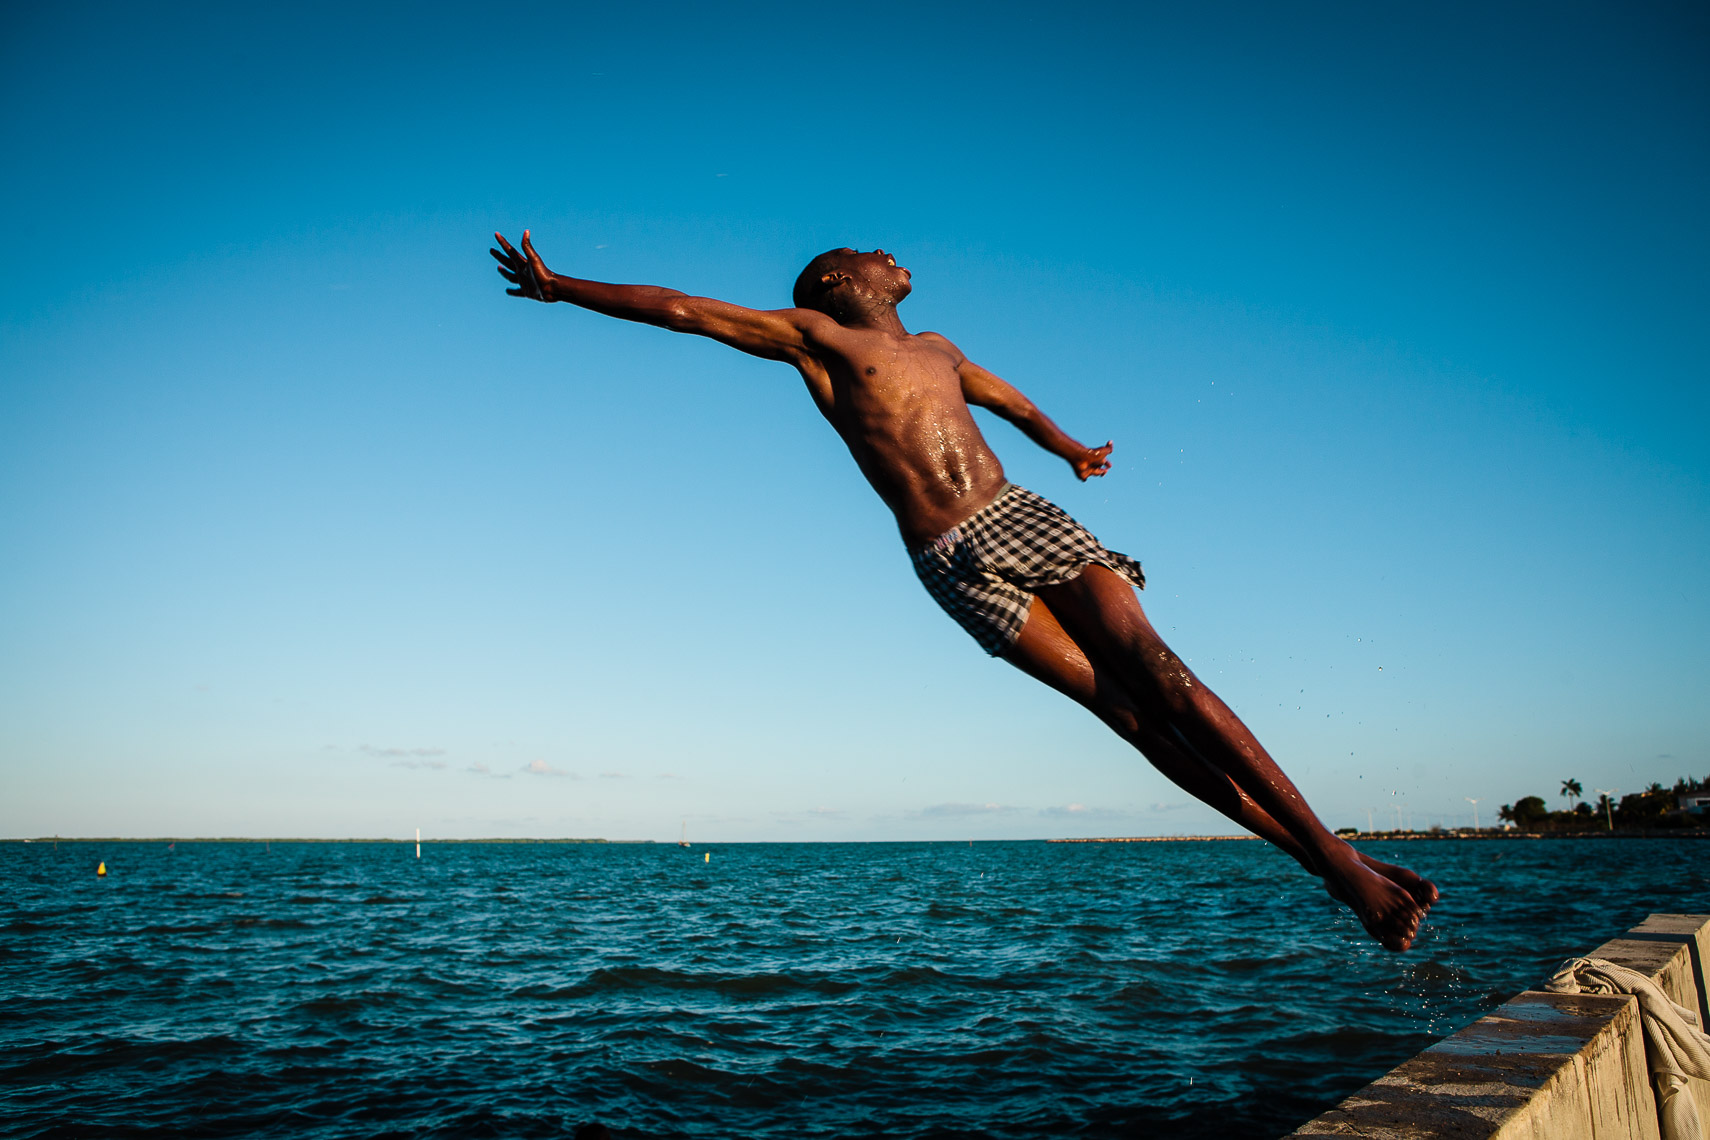 belize city boy jumps off seawall into ocean 